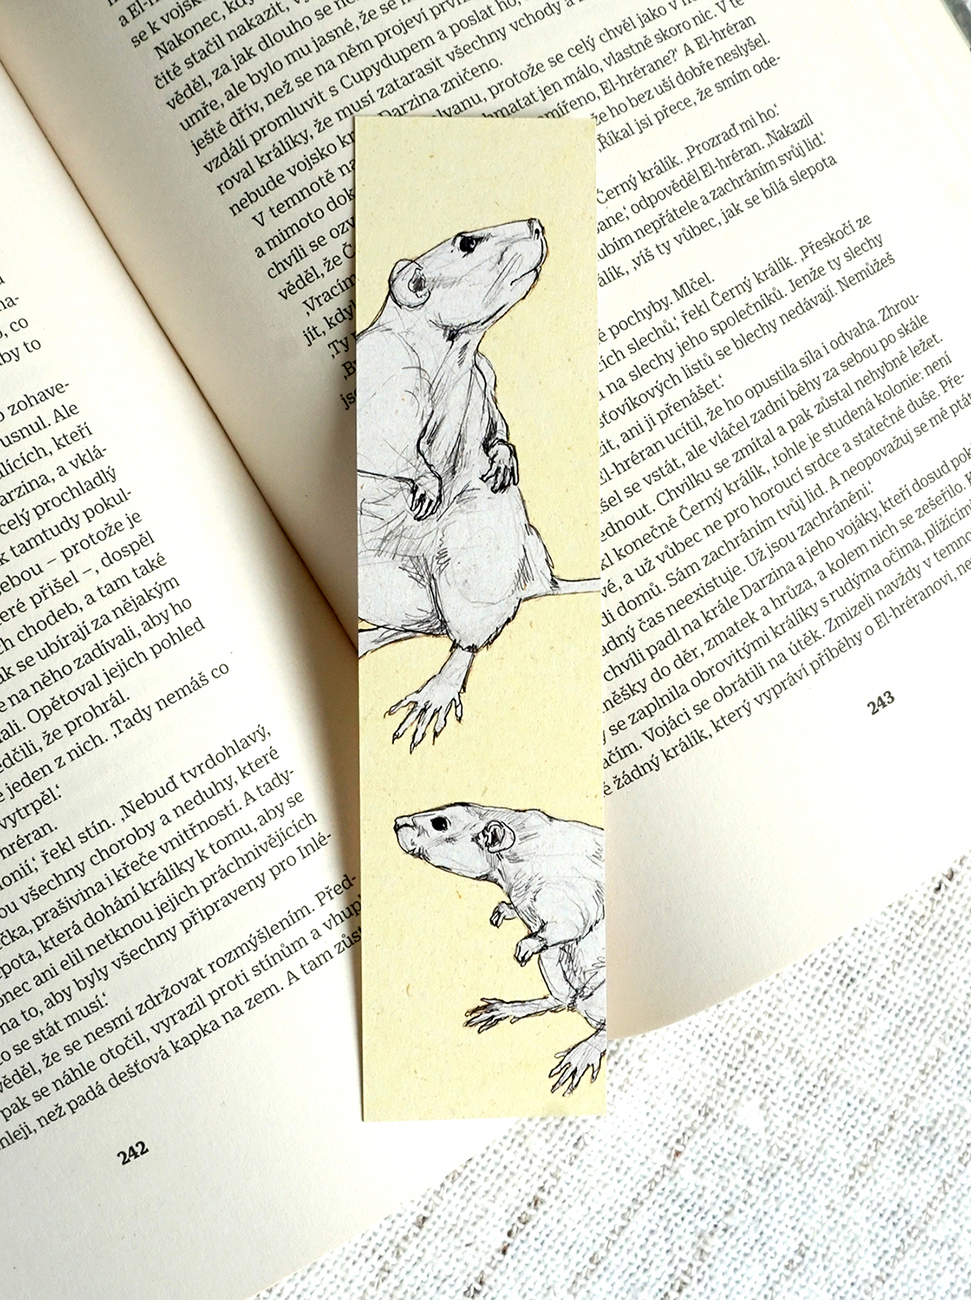 The bookmark - rats